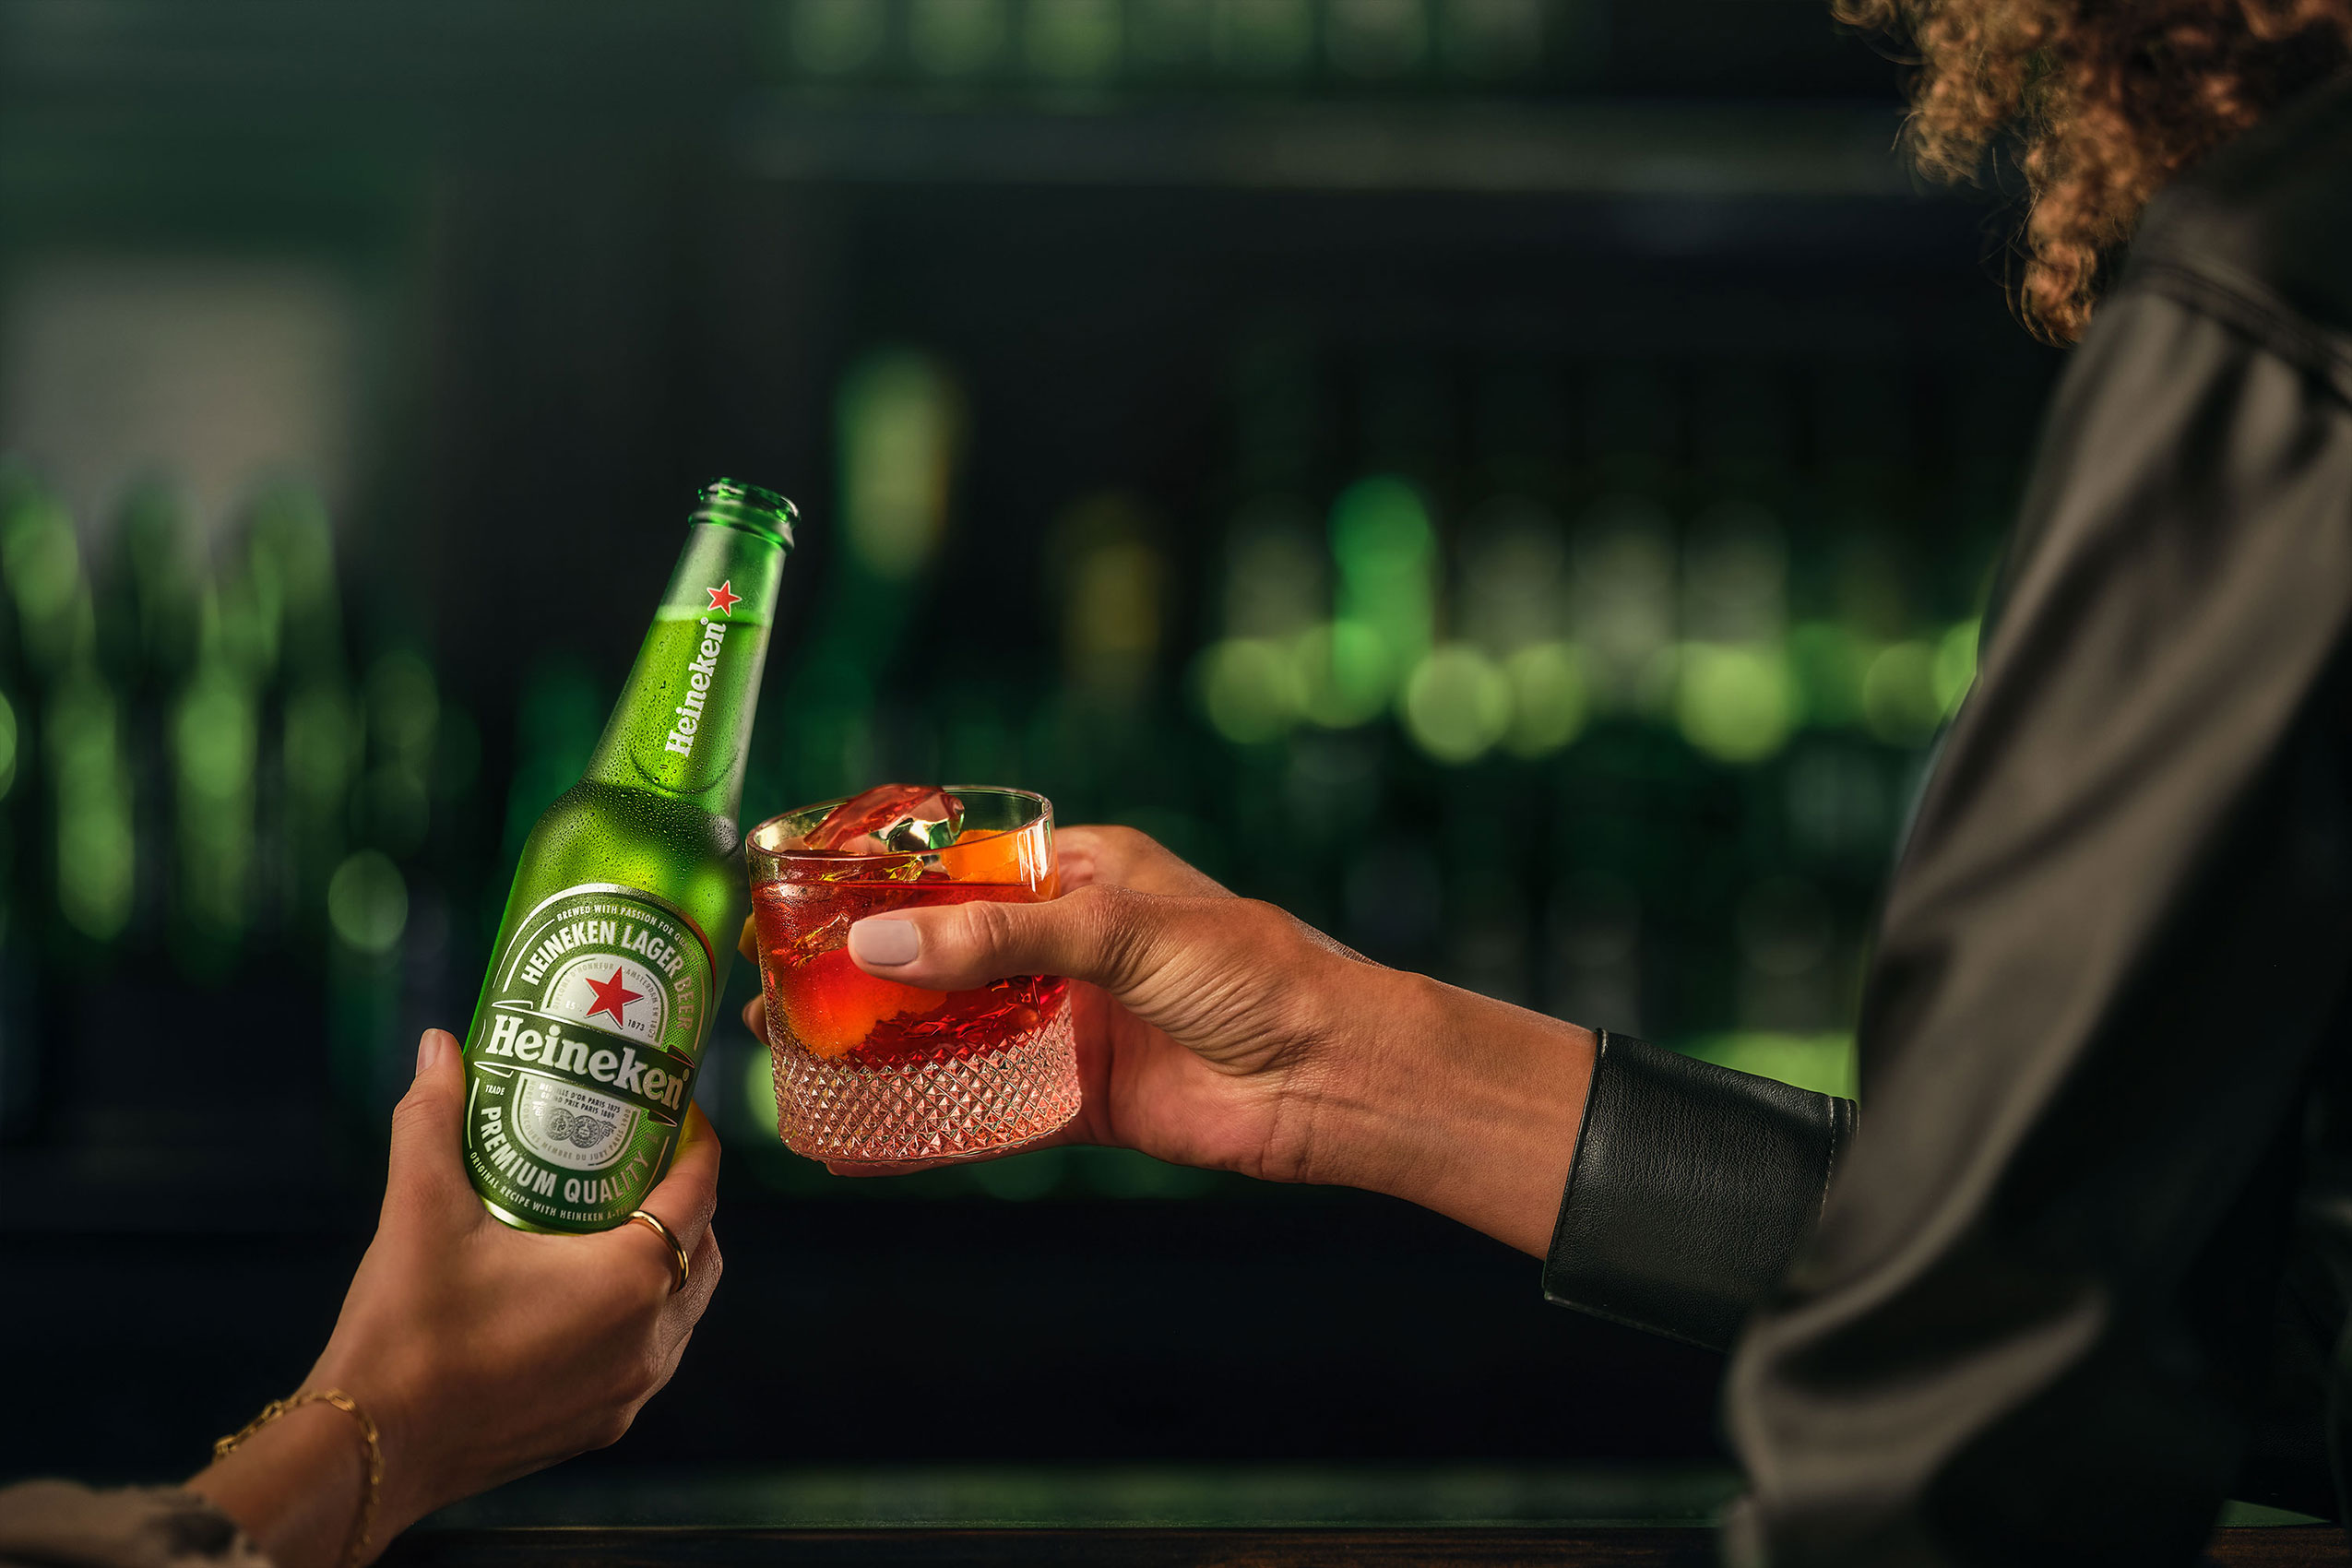 Heineken Cheers to that Campain • Saatchi & Saatchi • Advertising & Lifestyle Photograpy